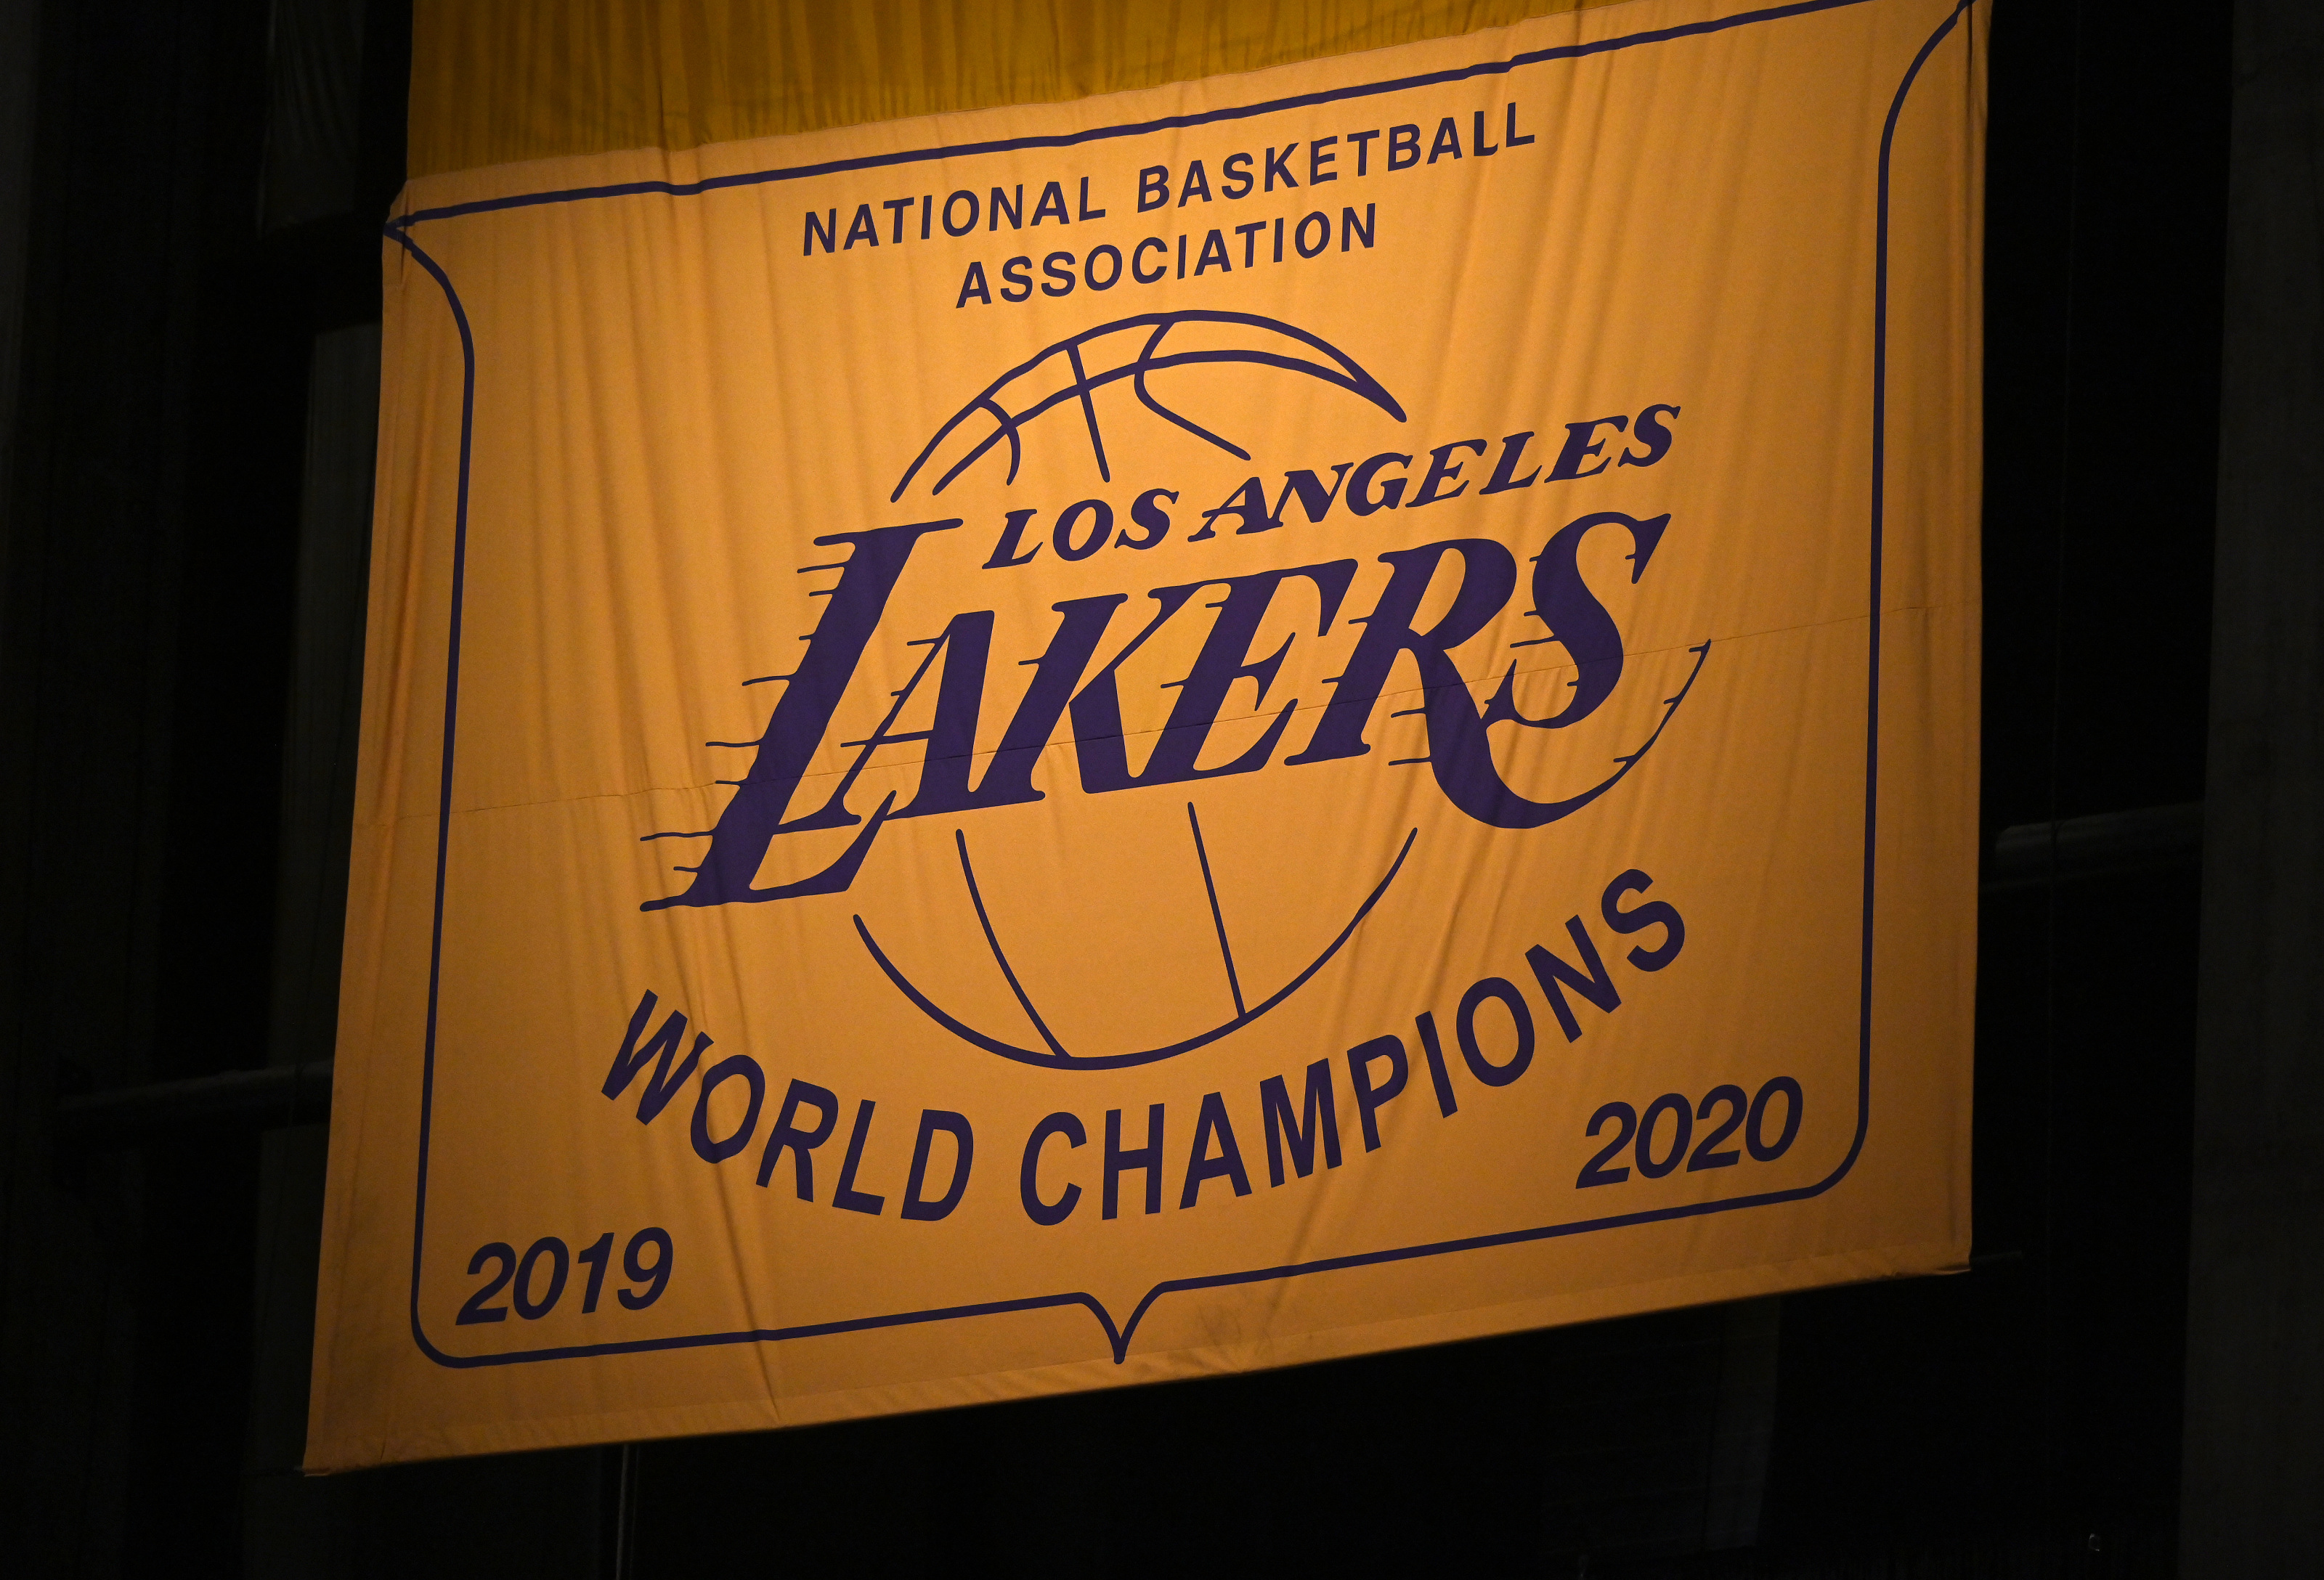 Minneapolis Lakers Team History